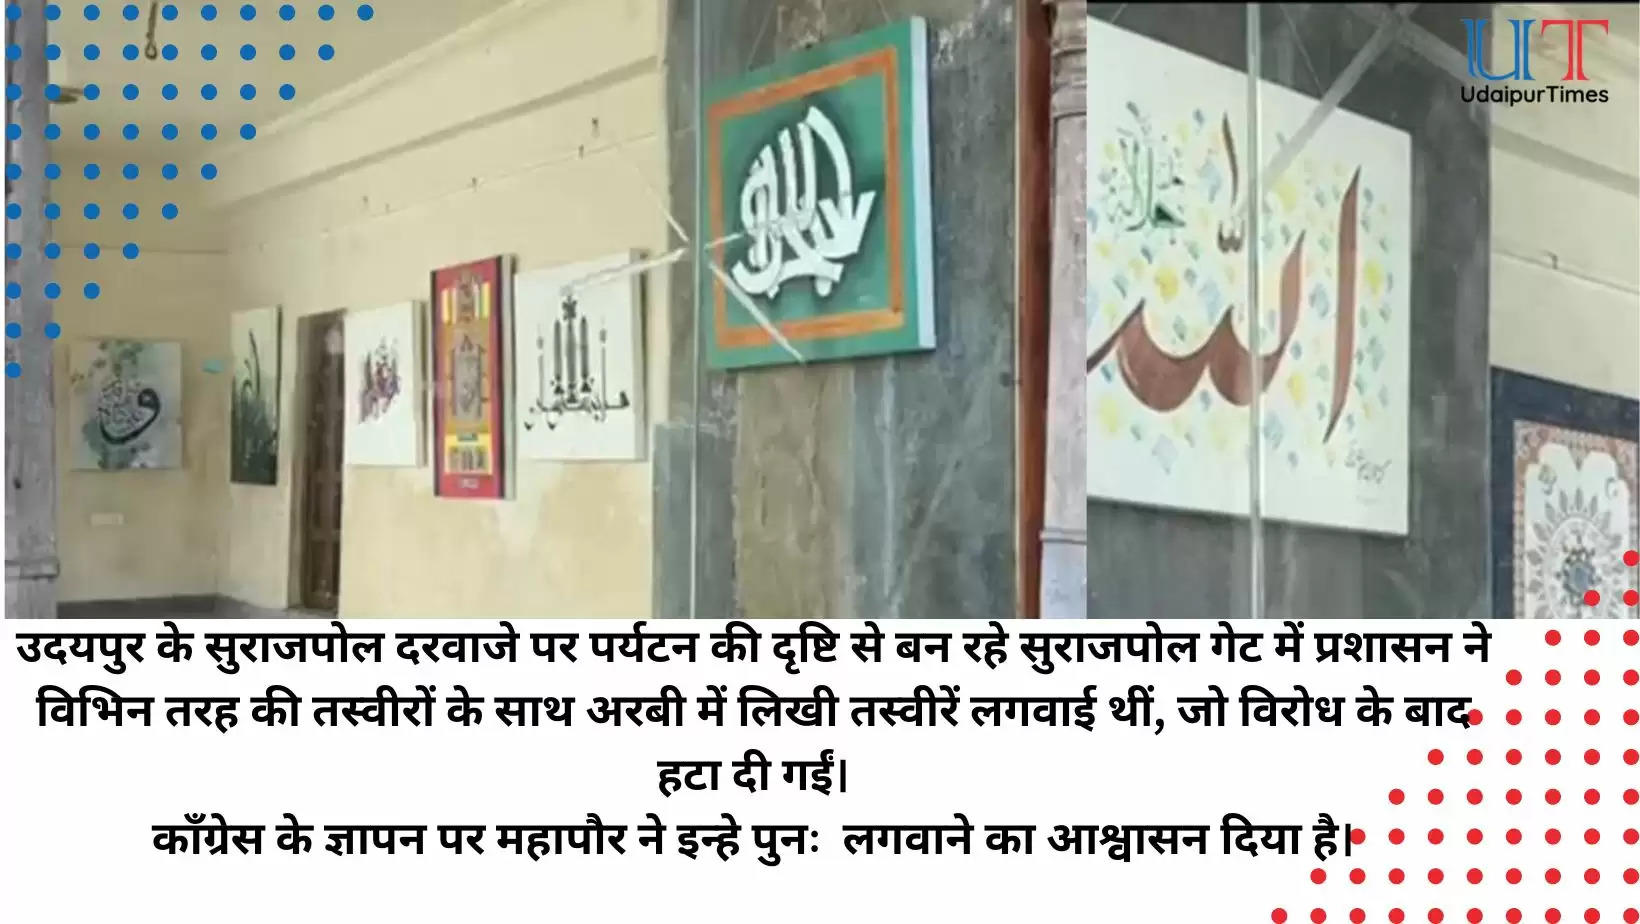 Surajpol Gate Arabic Calligraphy Removed from Surajpol Gate UMC Mayor assures reinstating